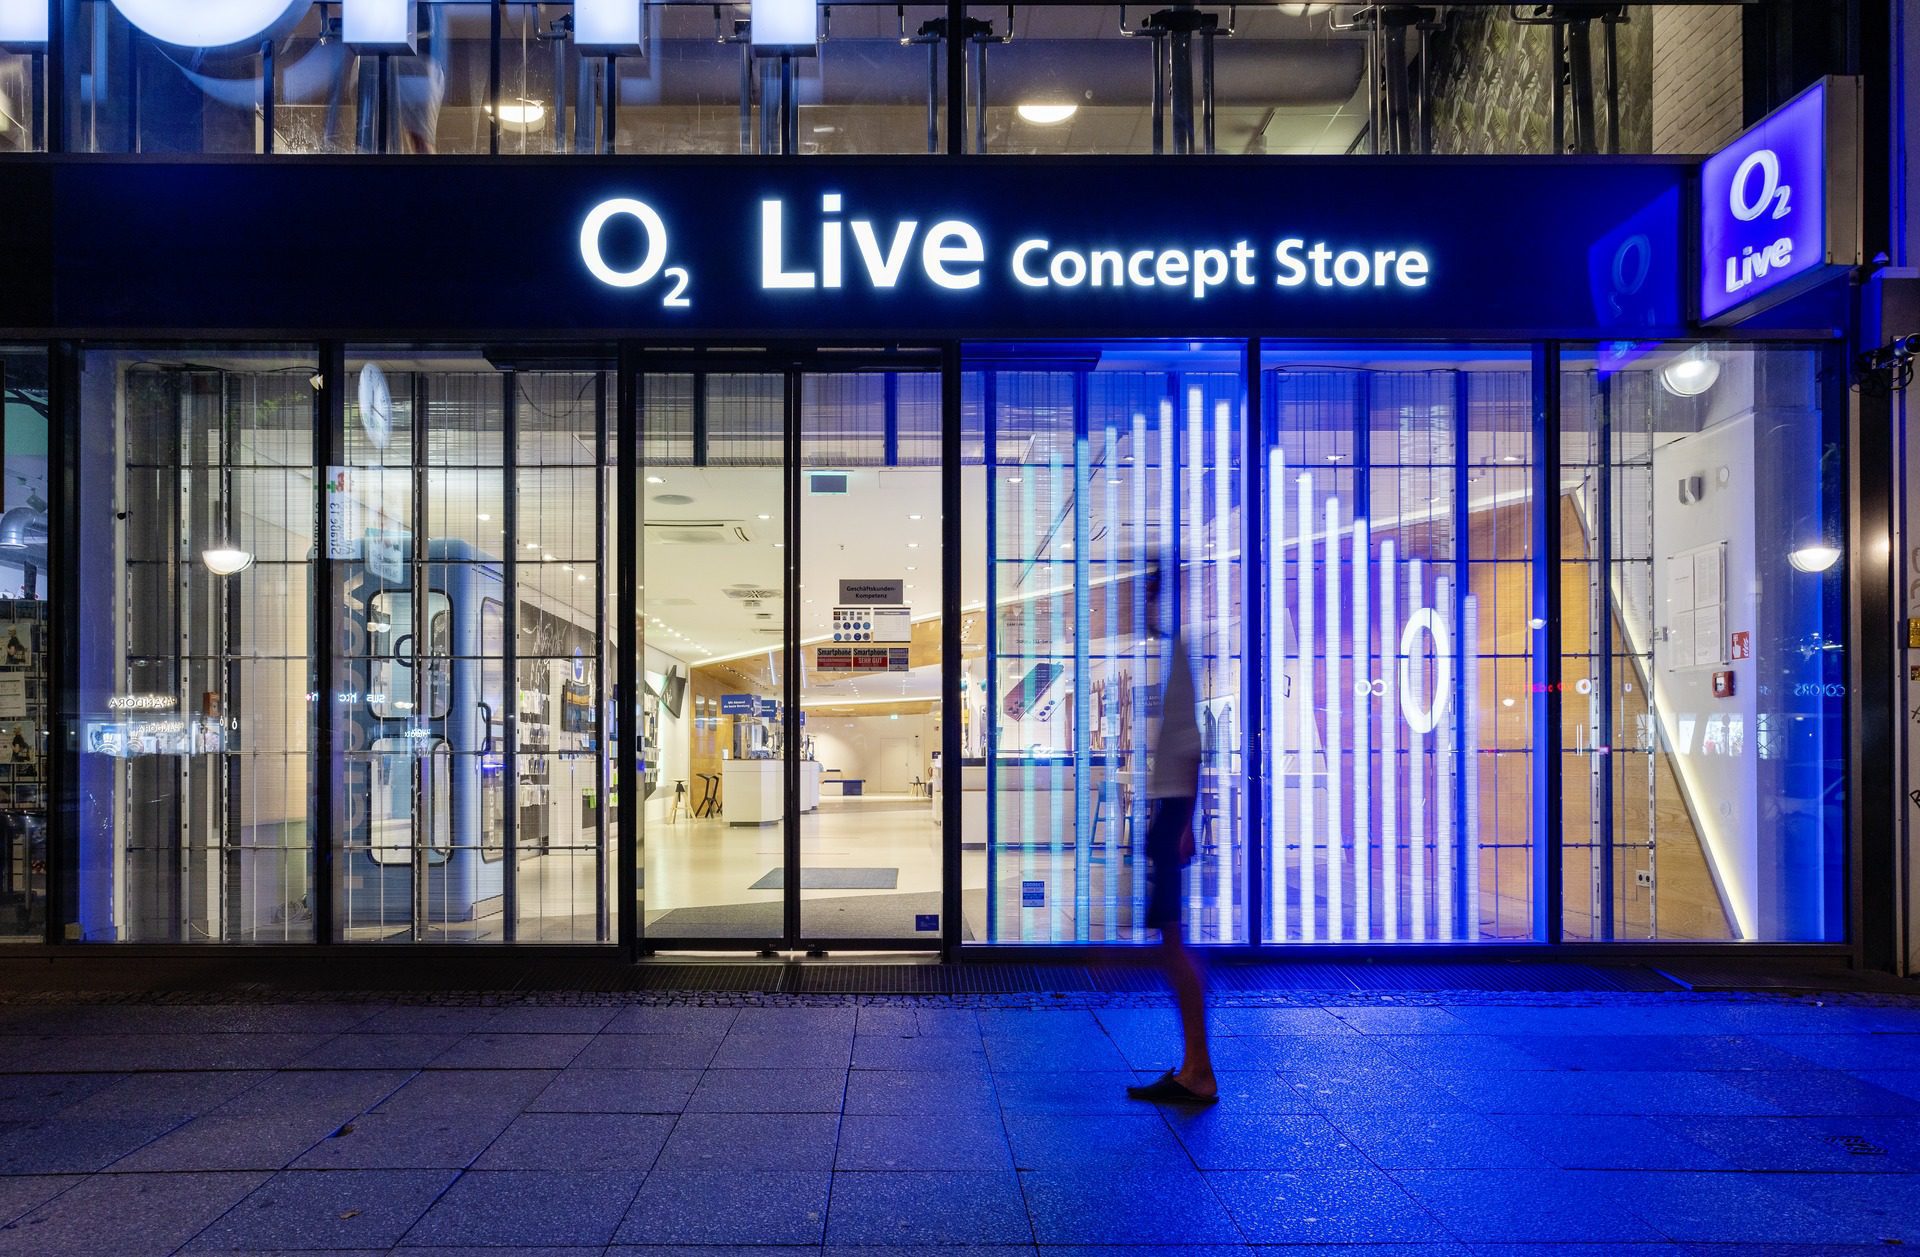 O2 Live Concept Store